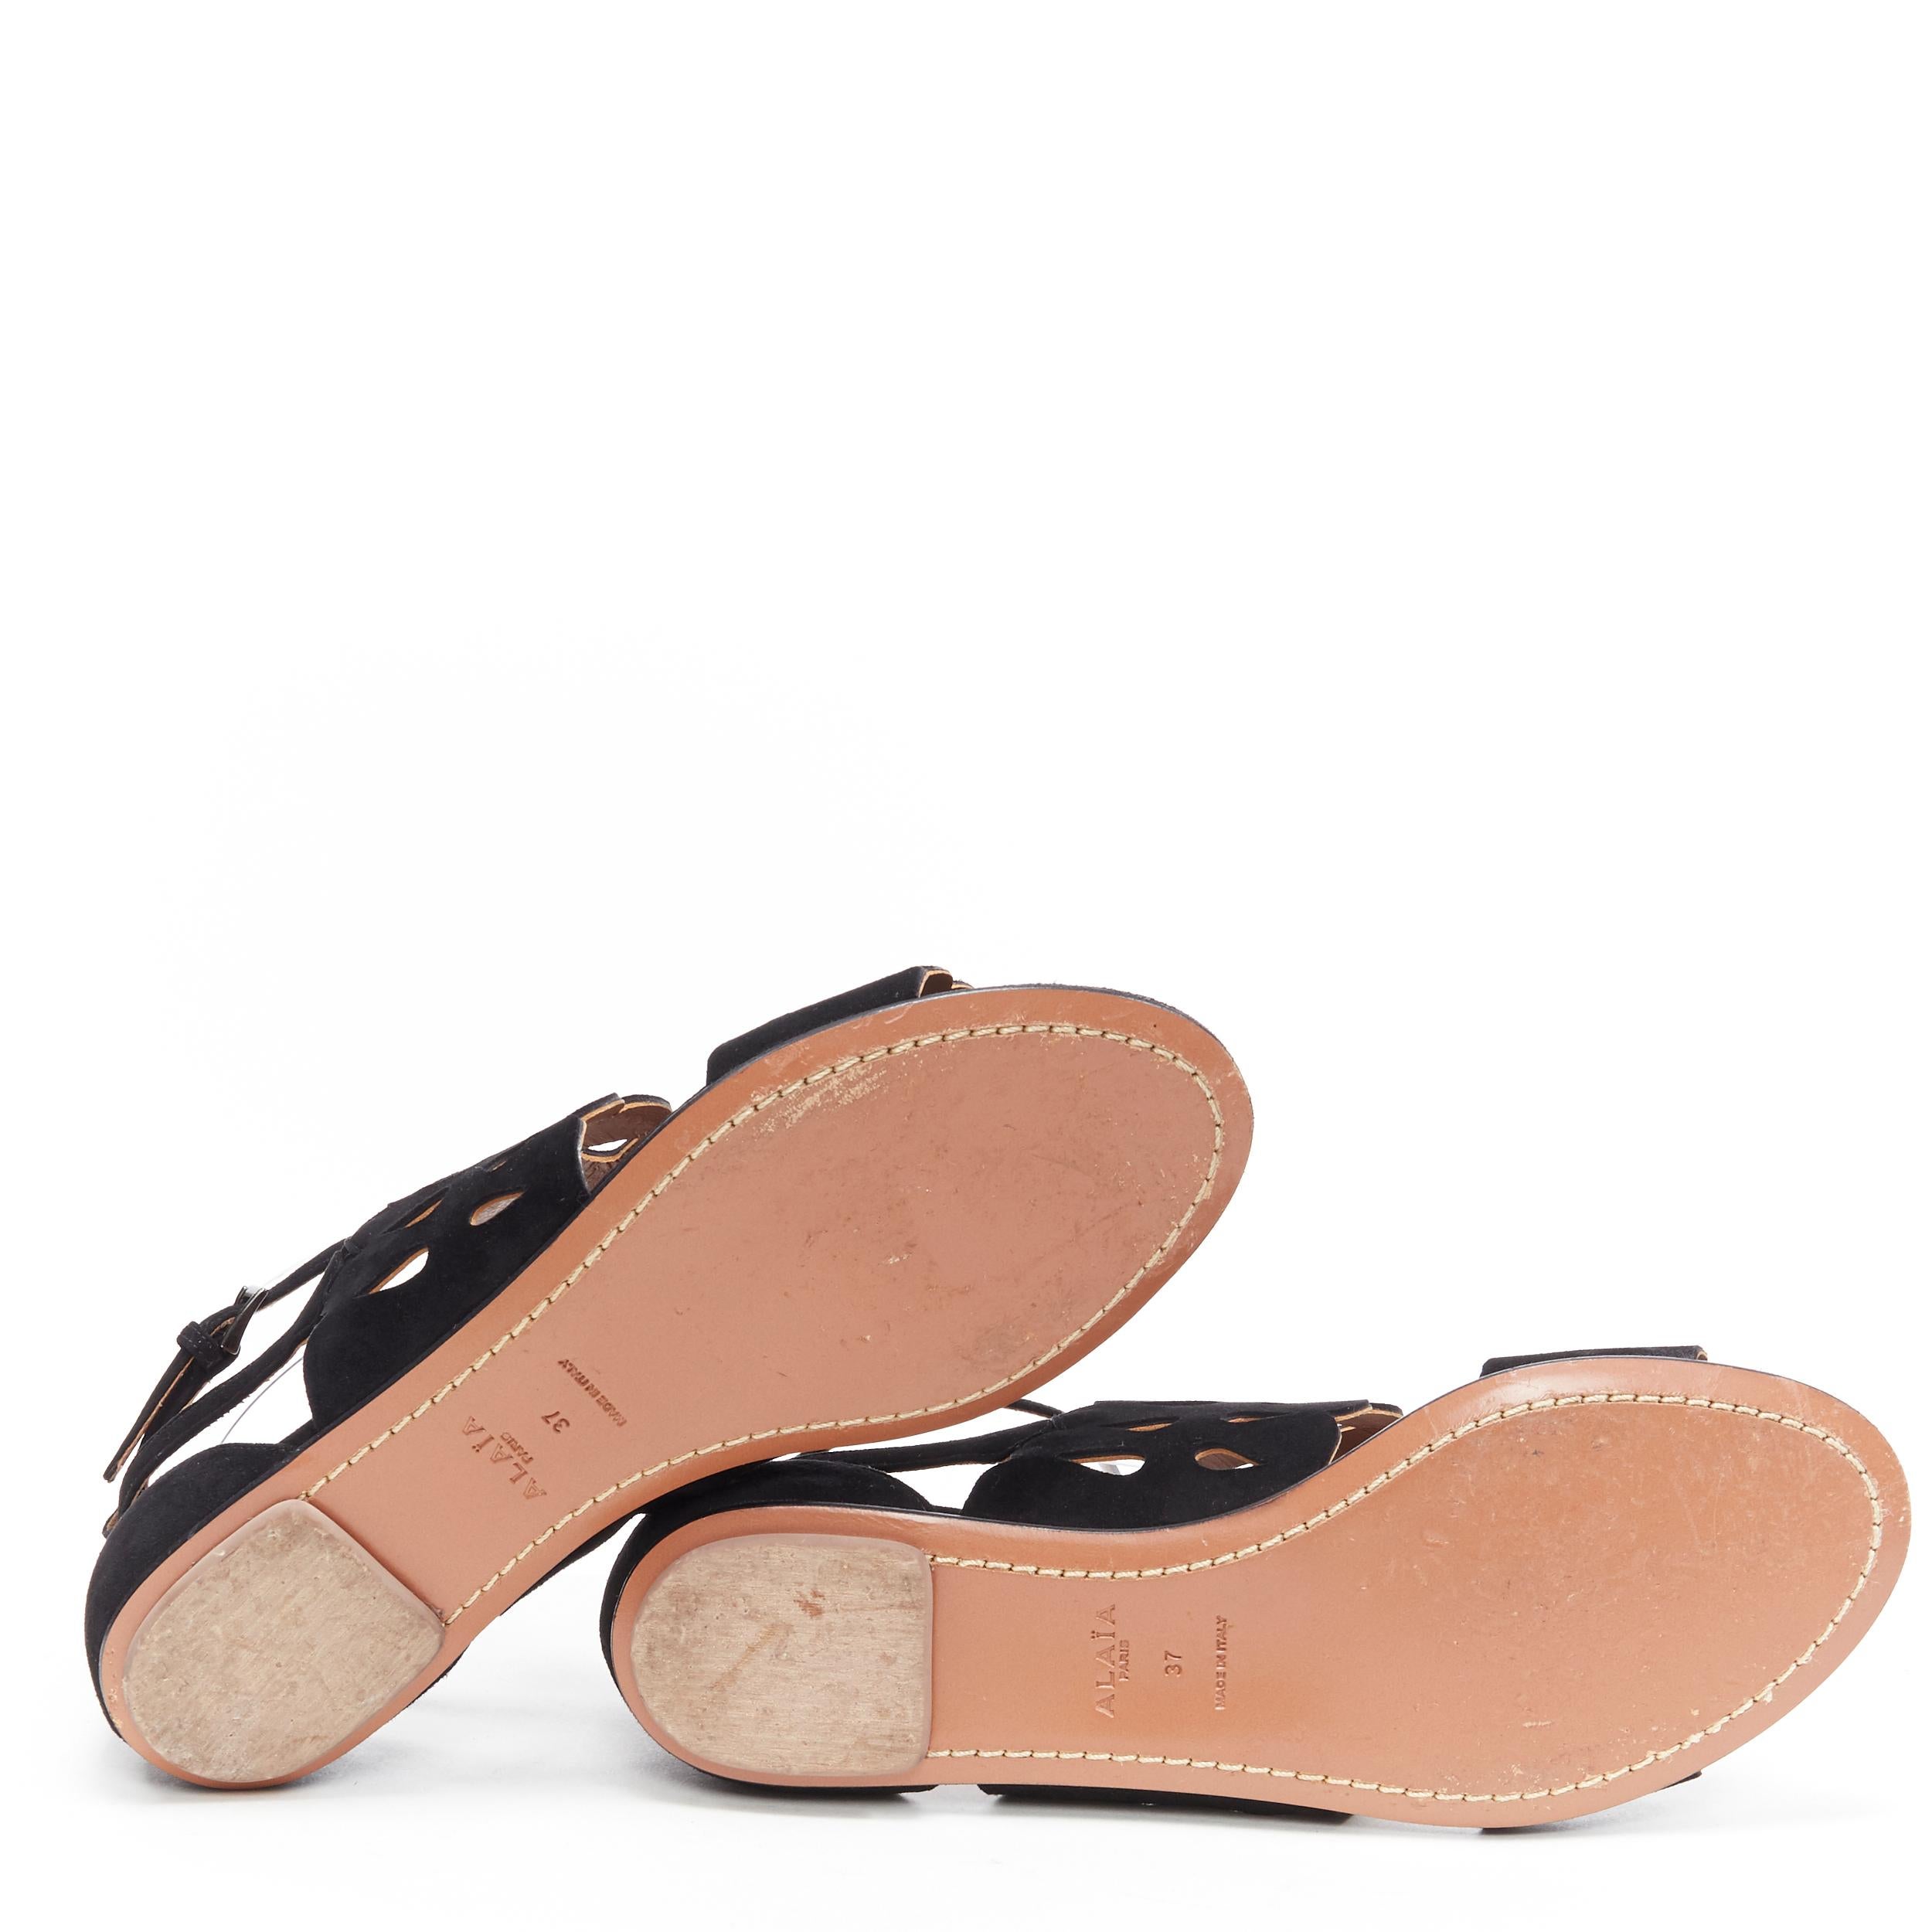 Black ALAIA black suede squiggly cut out strap open toe ankle wrap flat sandals EU37